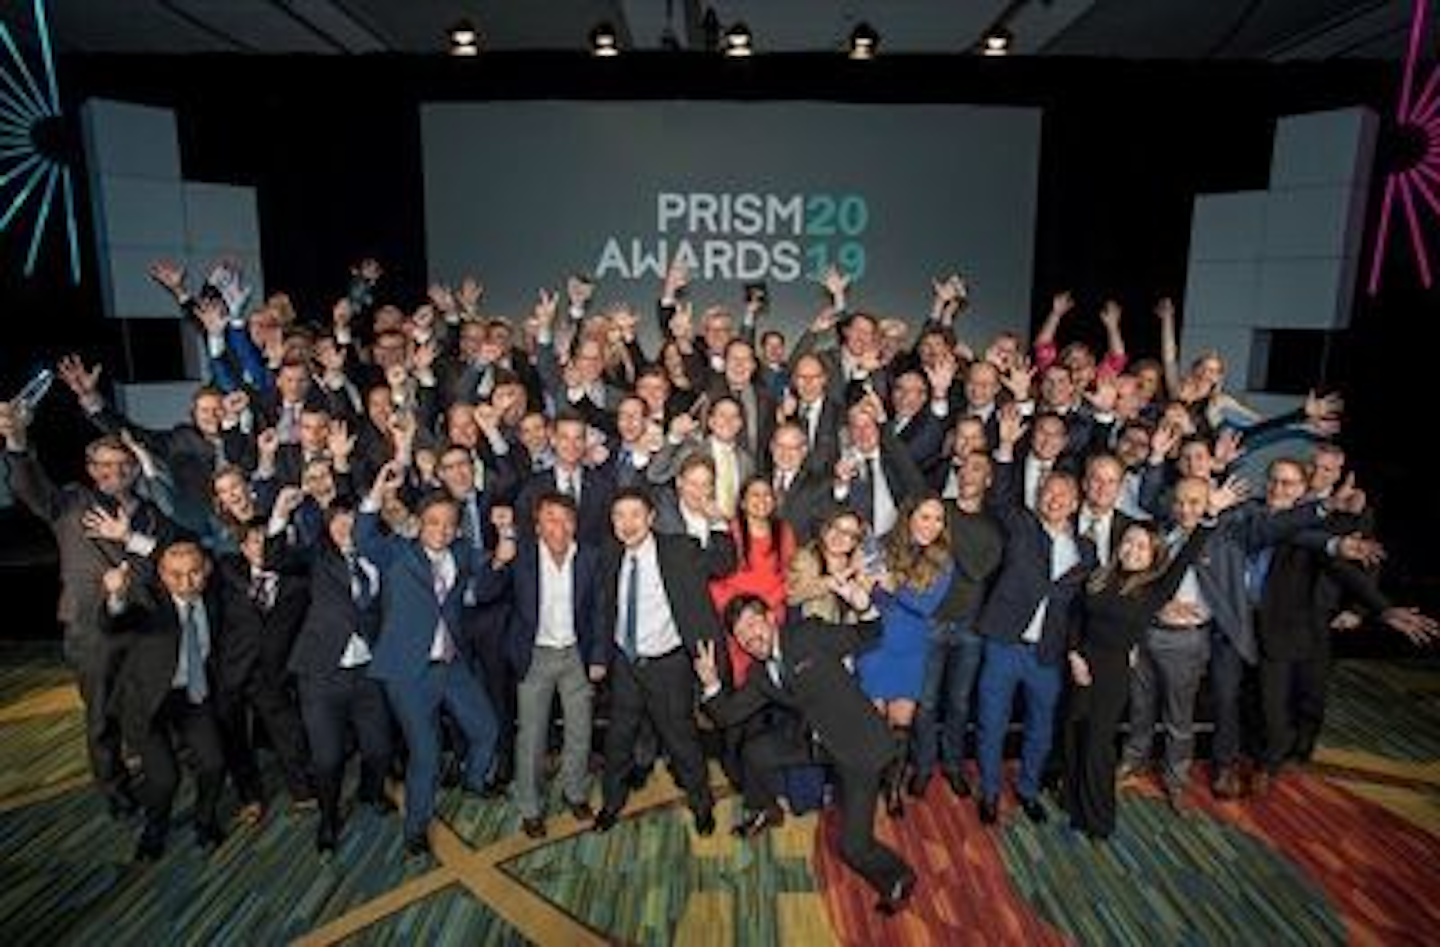 2019 Prism Awards honor groundbreaking optics and photonics products